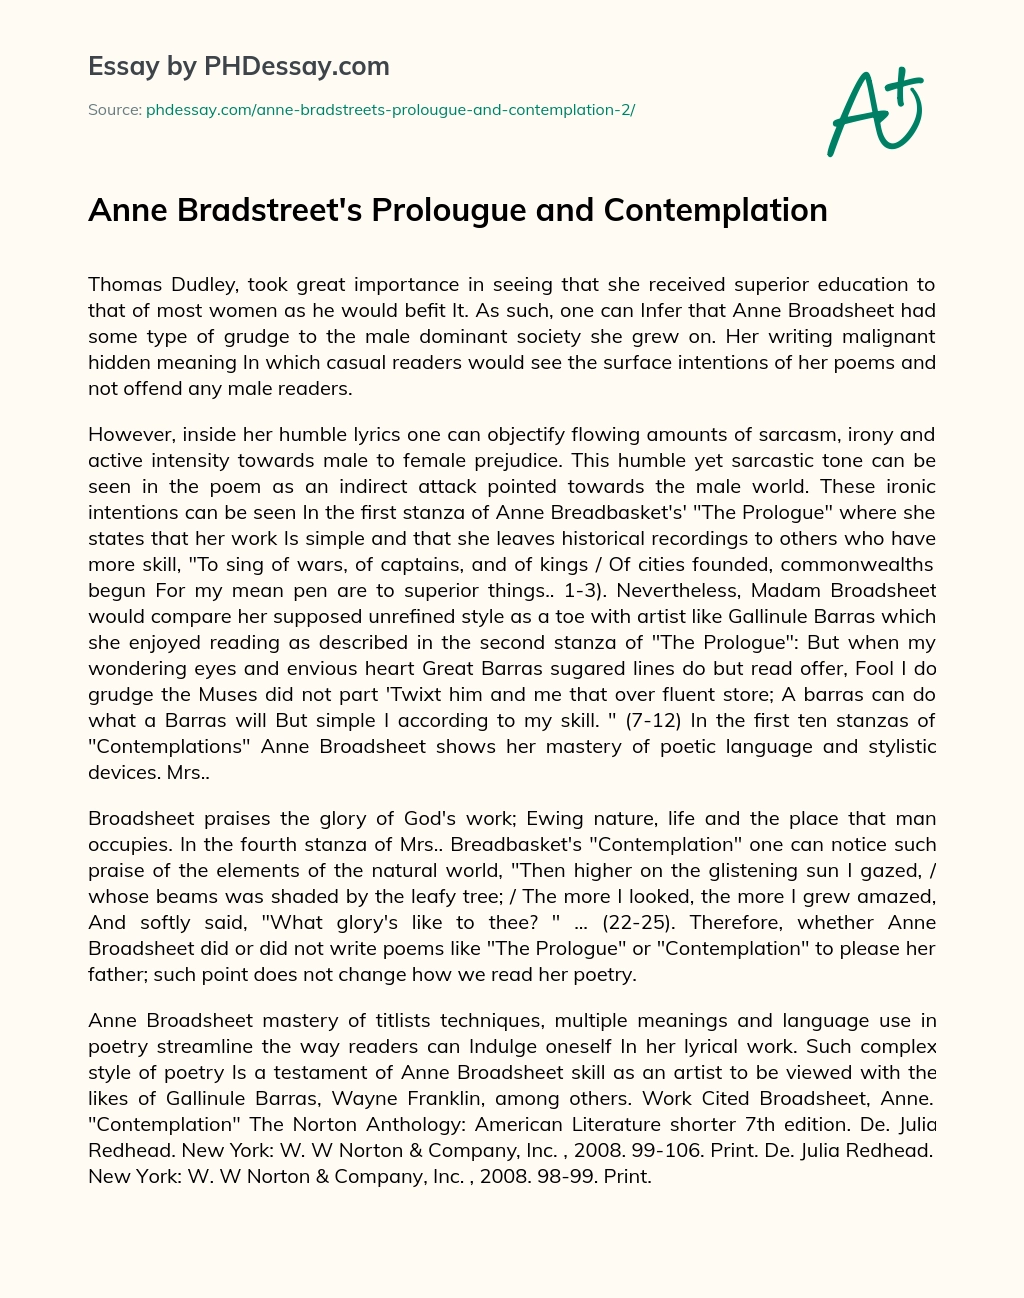 Anne Bradstreet’s Prolougue and Contemplation essay